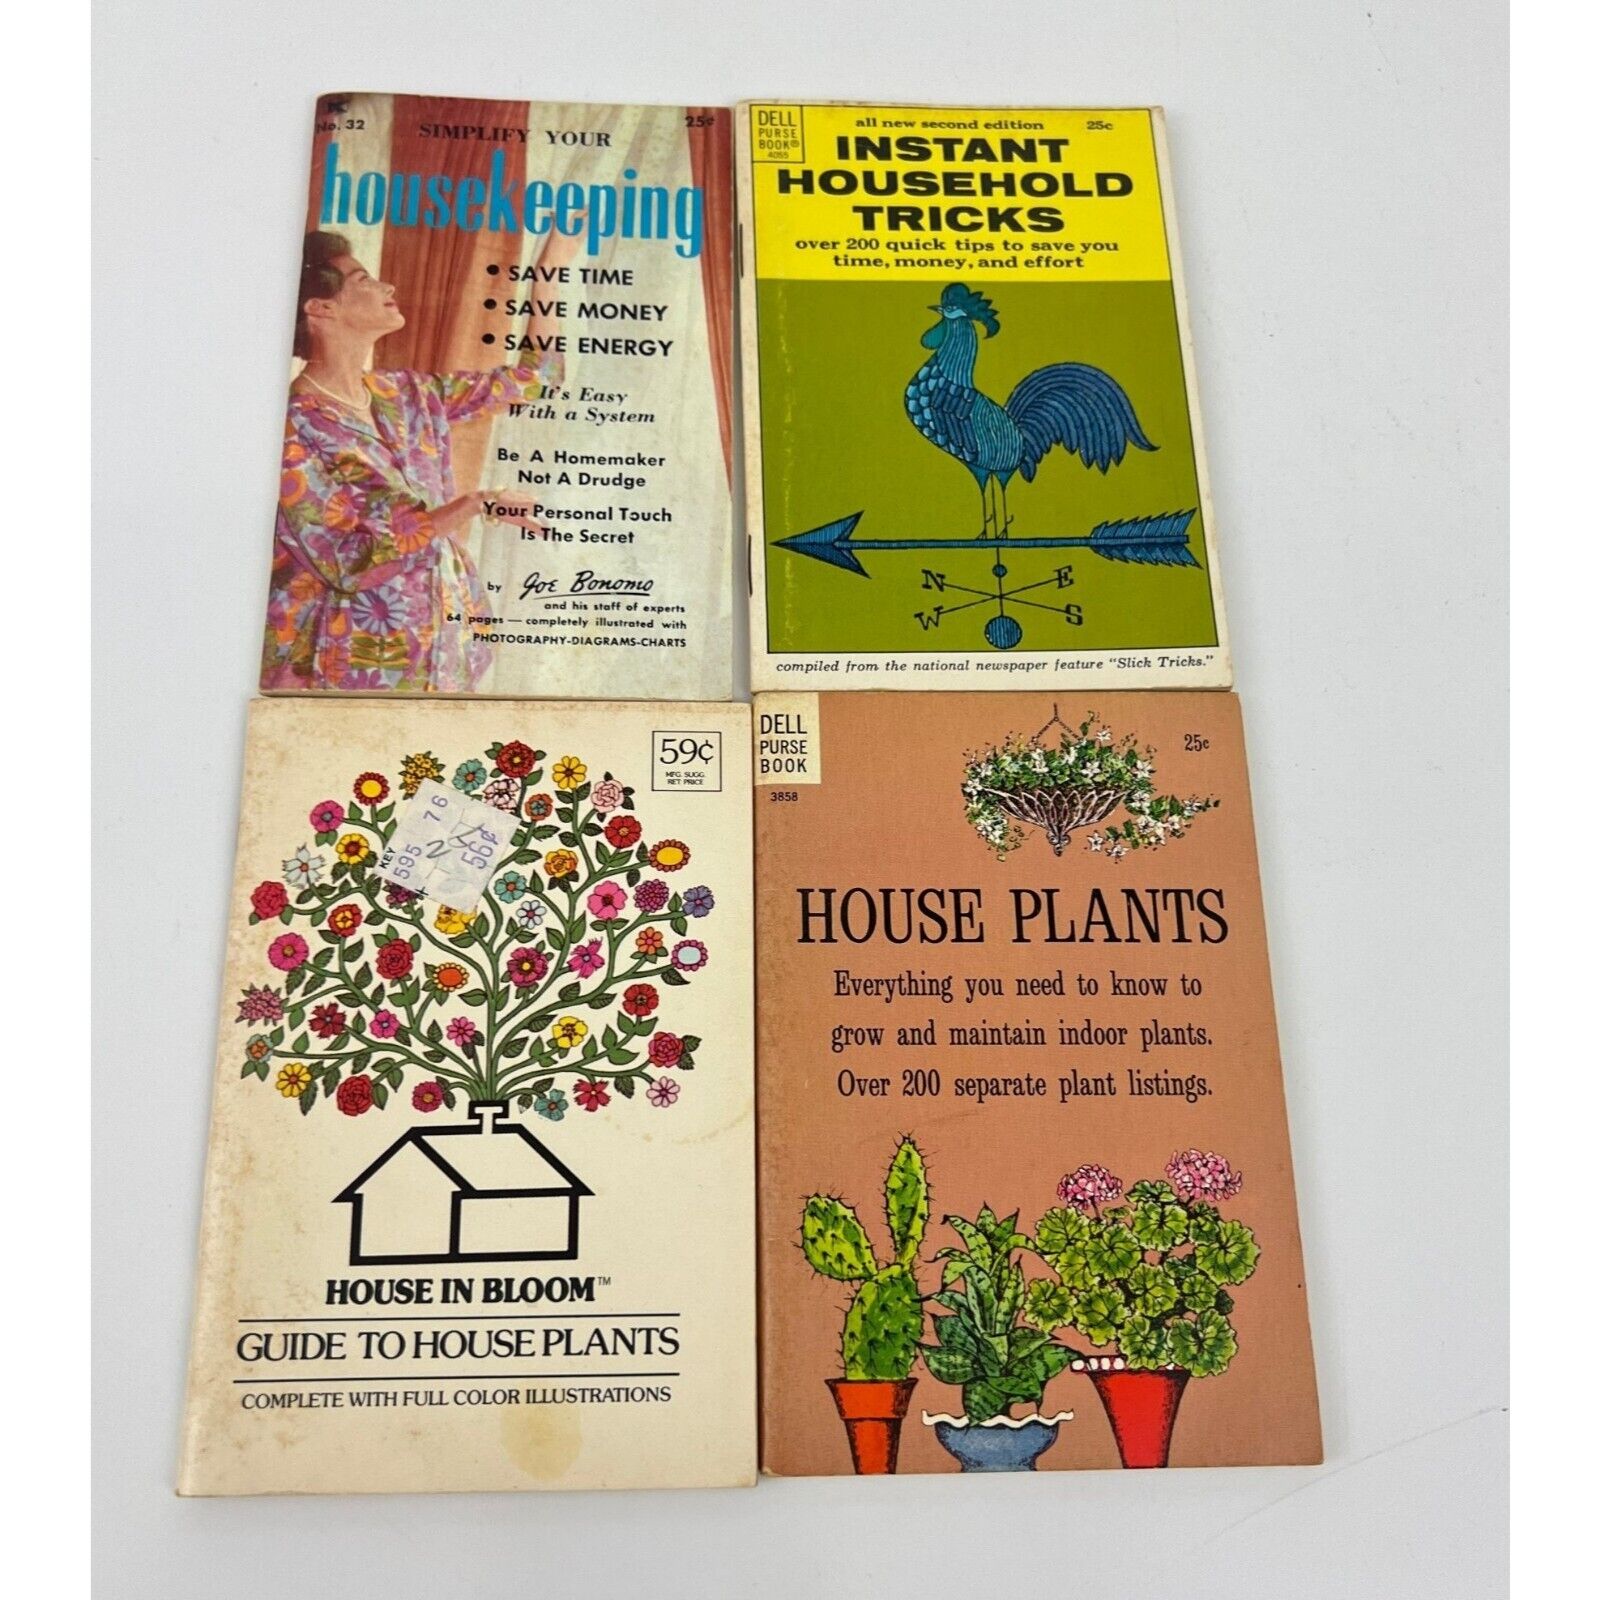 Vtg Dell Purse Book Housekeeping Household Tricks House Plants